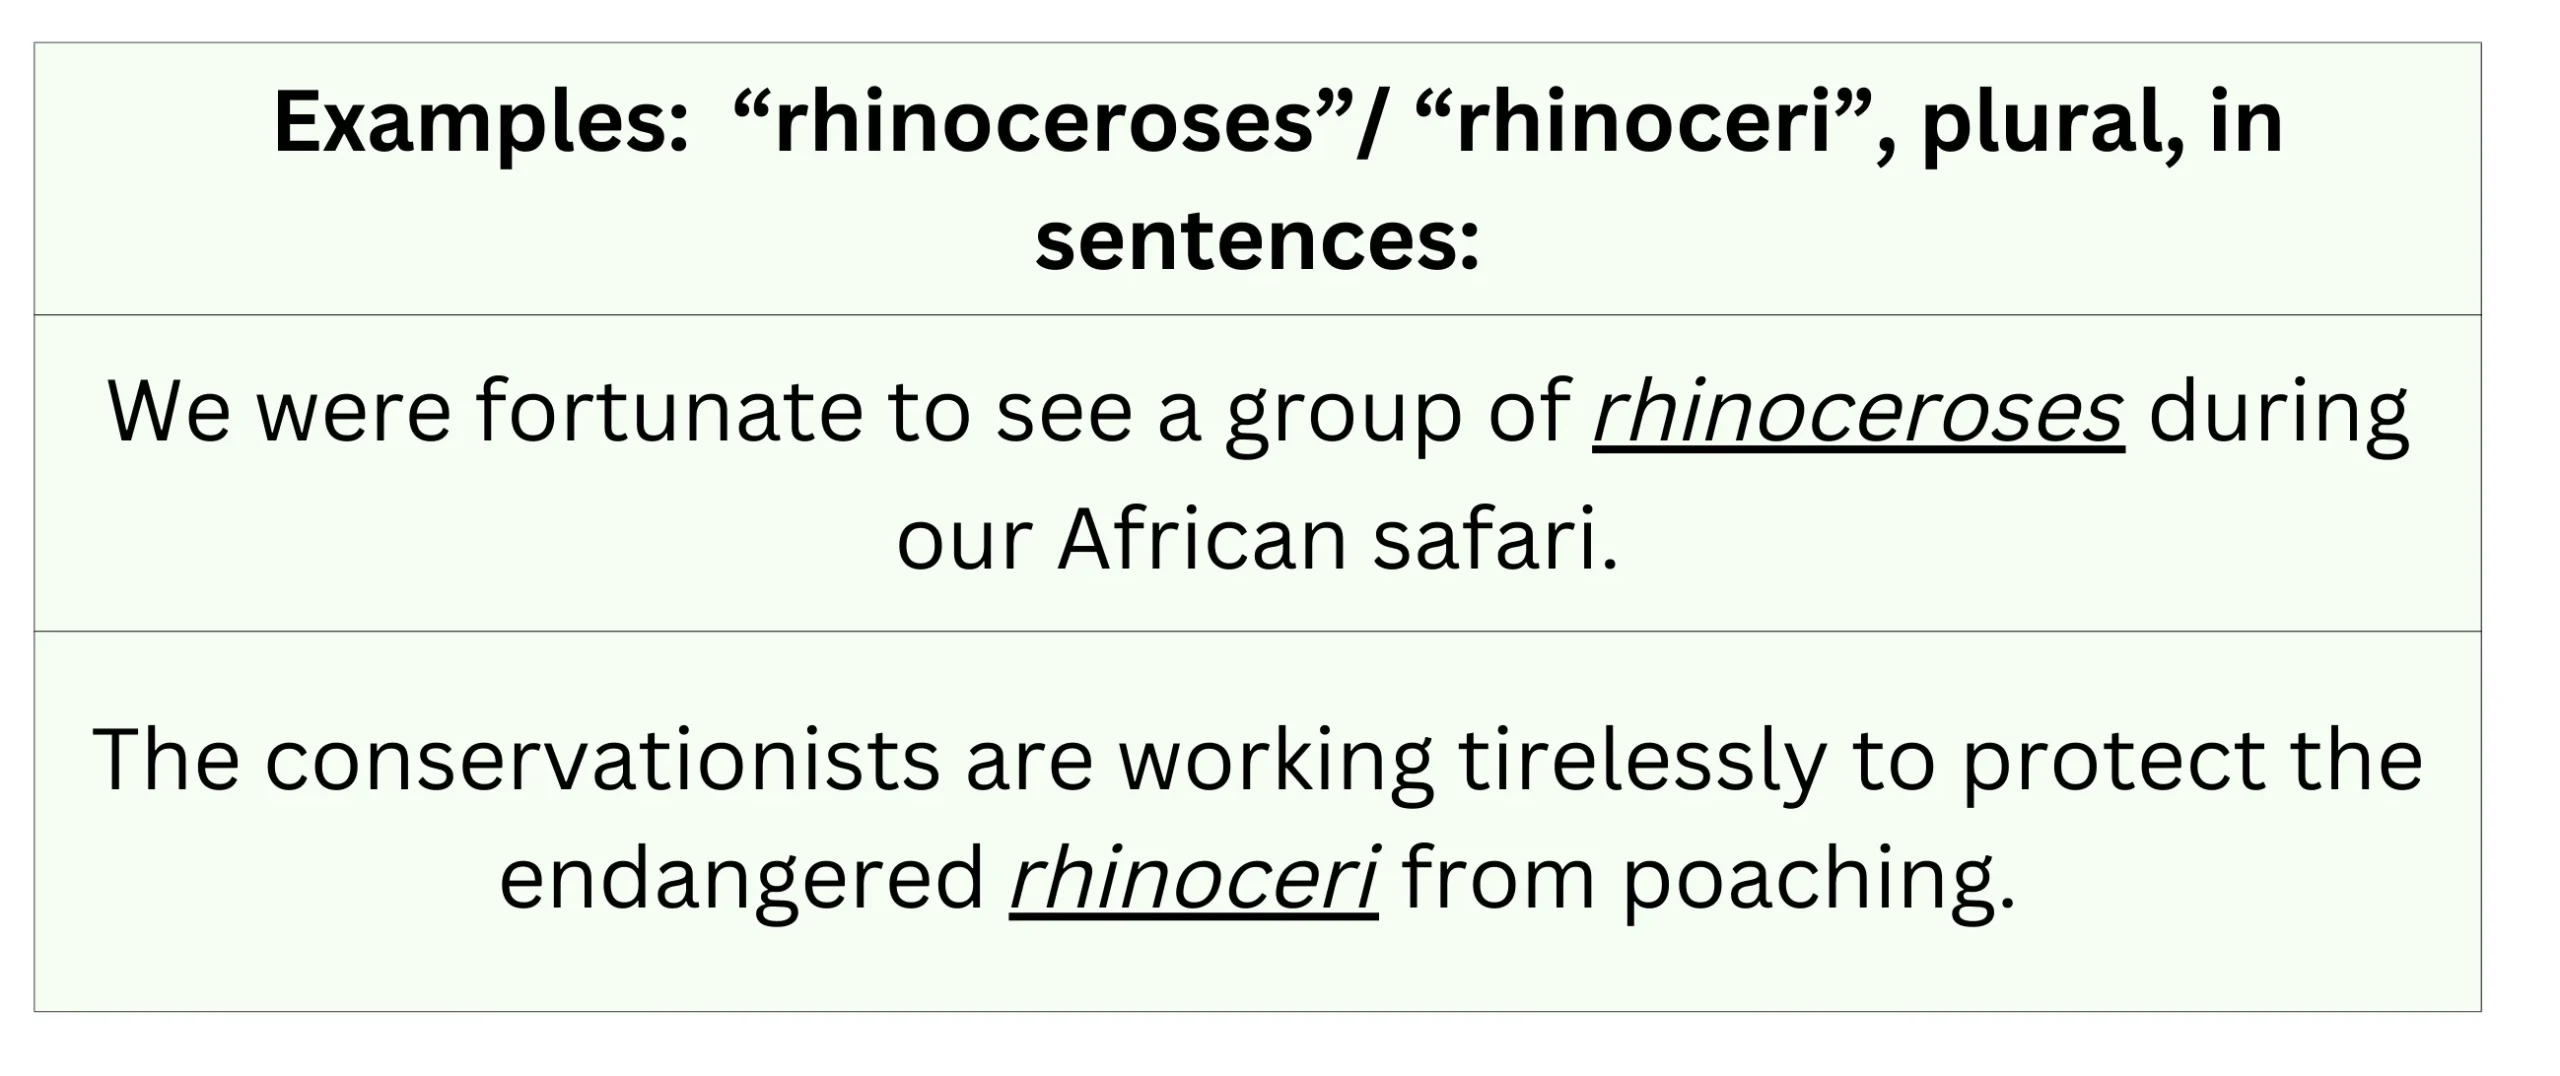 Examples of "rhinoceroses"/"rhinoceri" used as a plural noun in sentences.